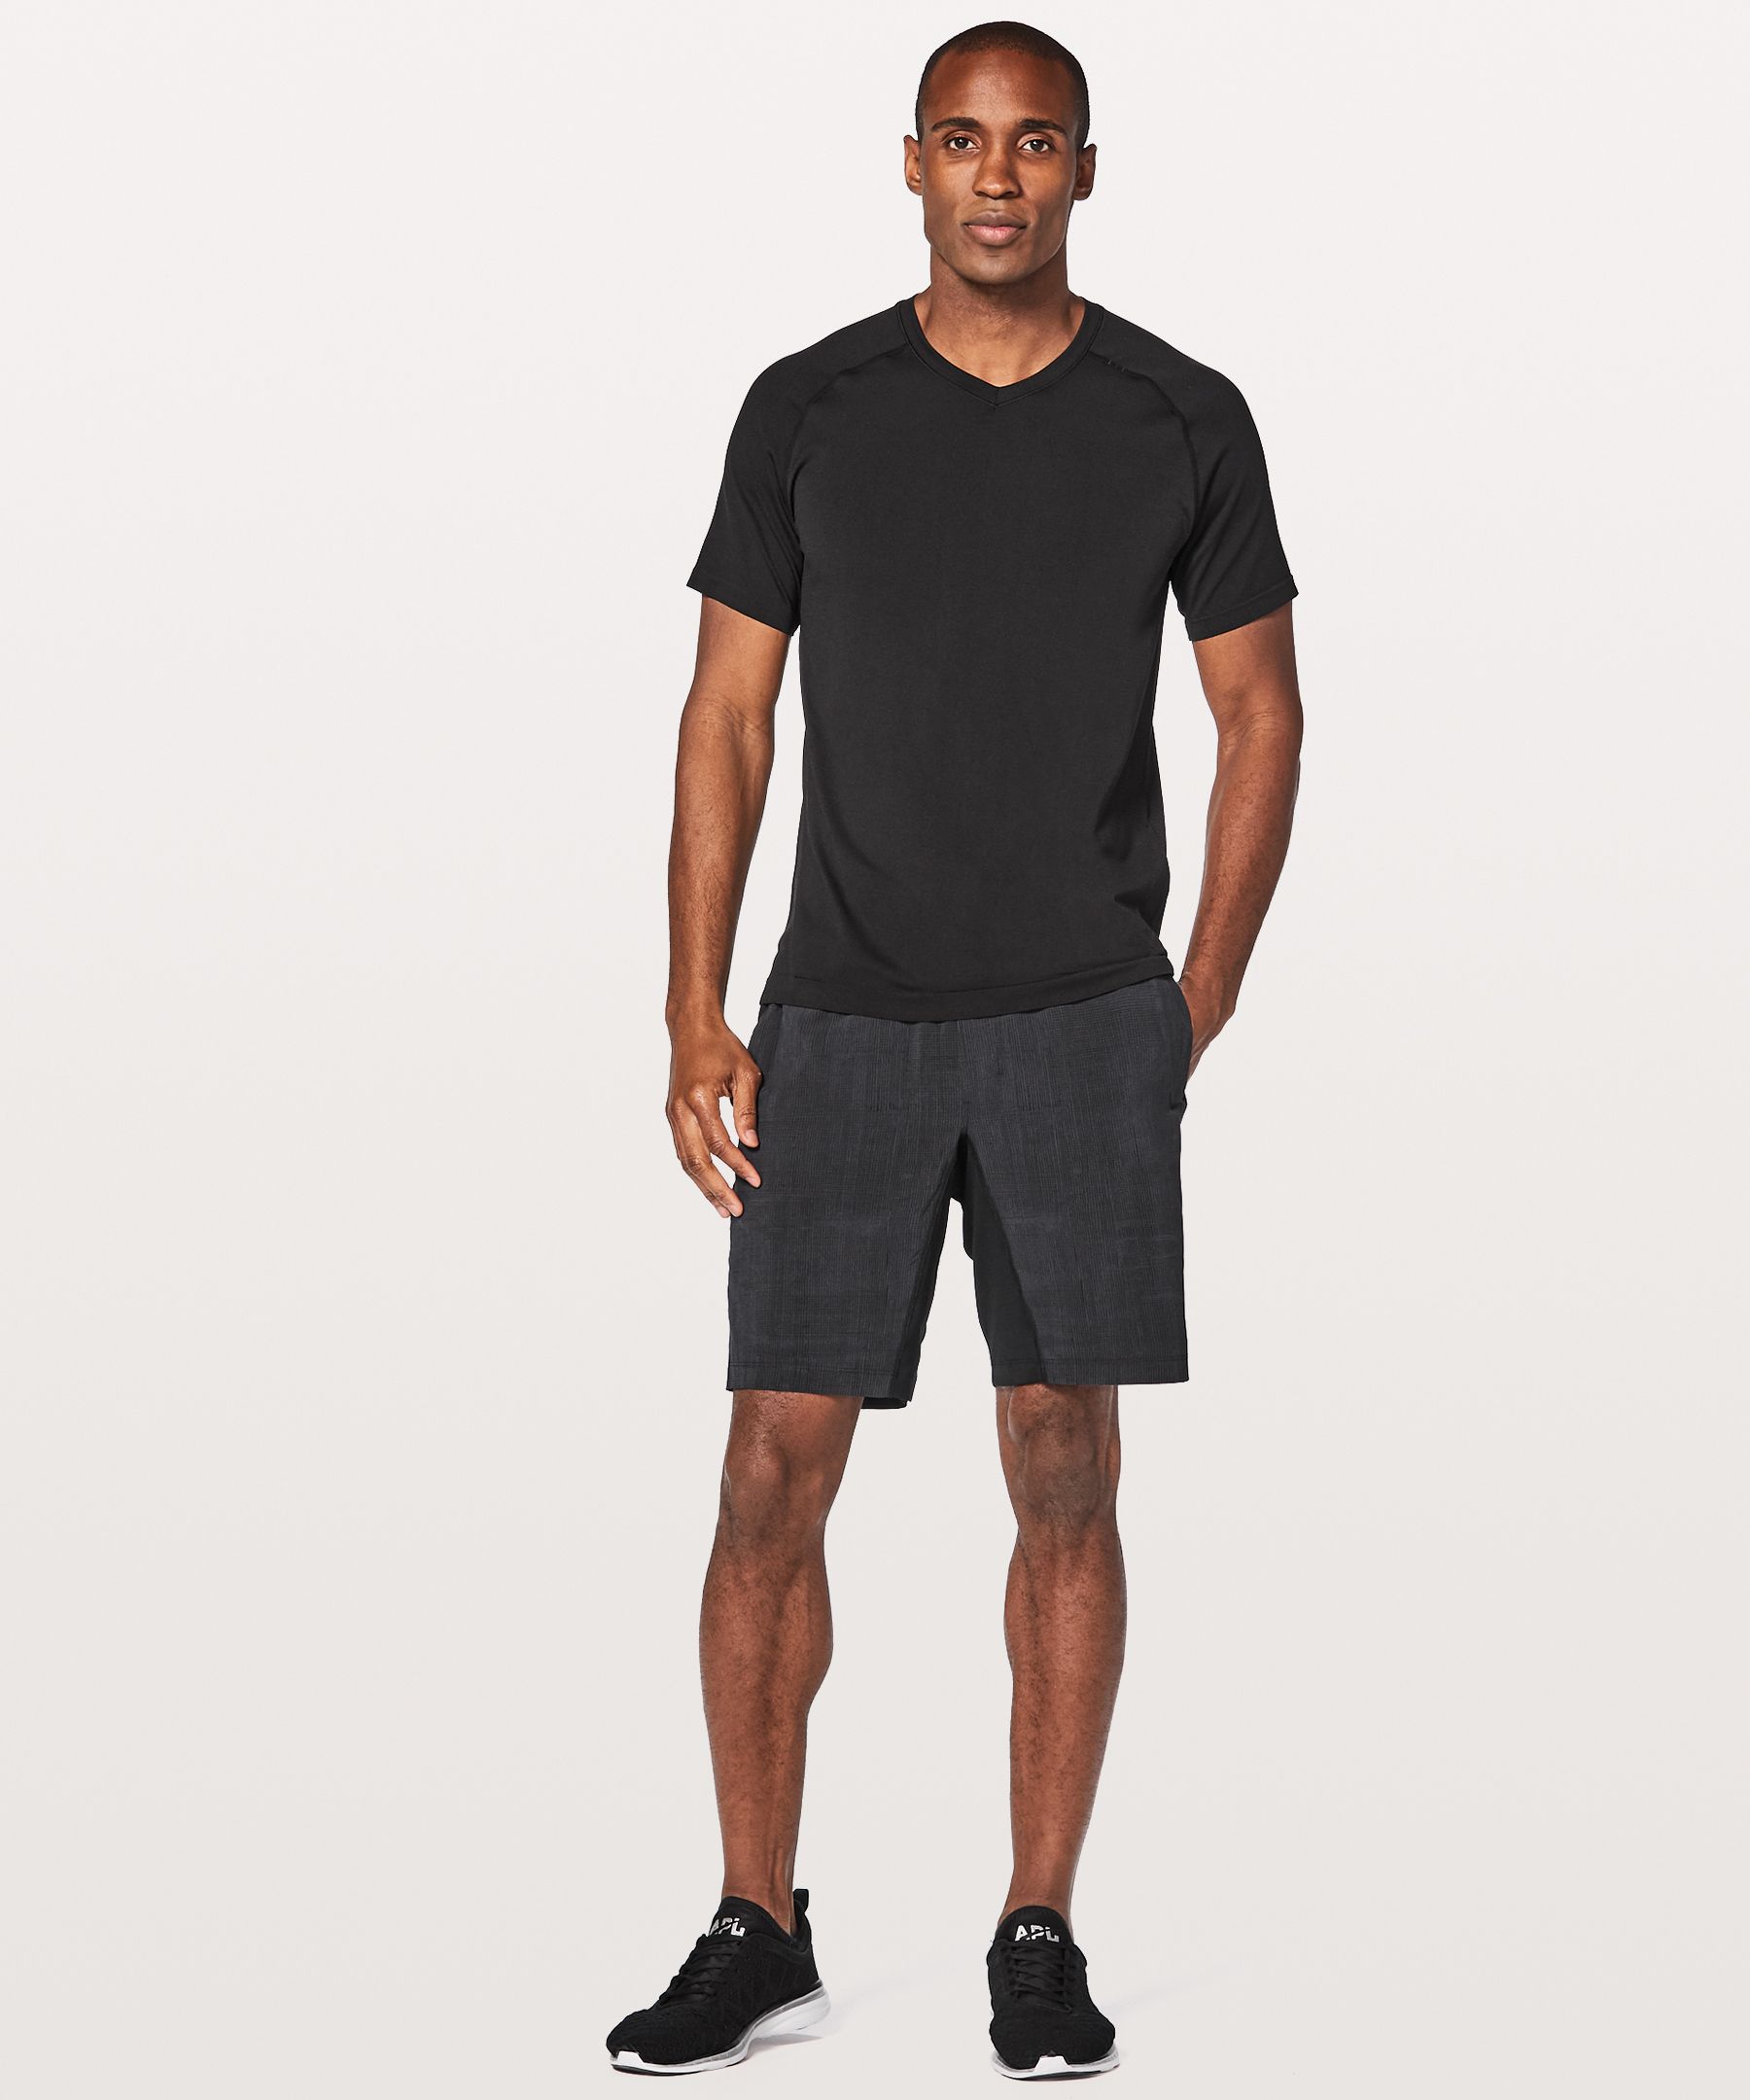 Men's Running Clothes + Yoga Gear | lululemon athletica